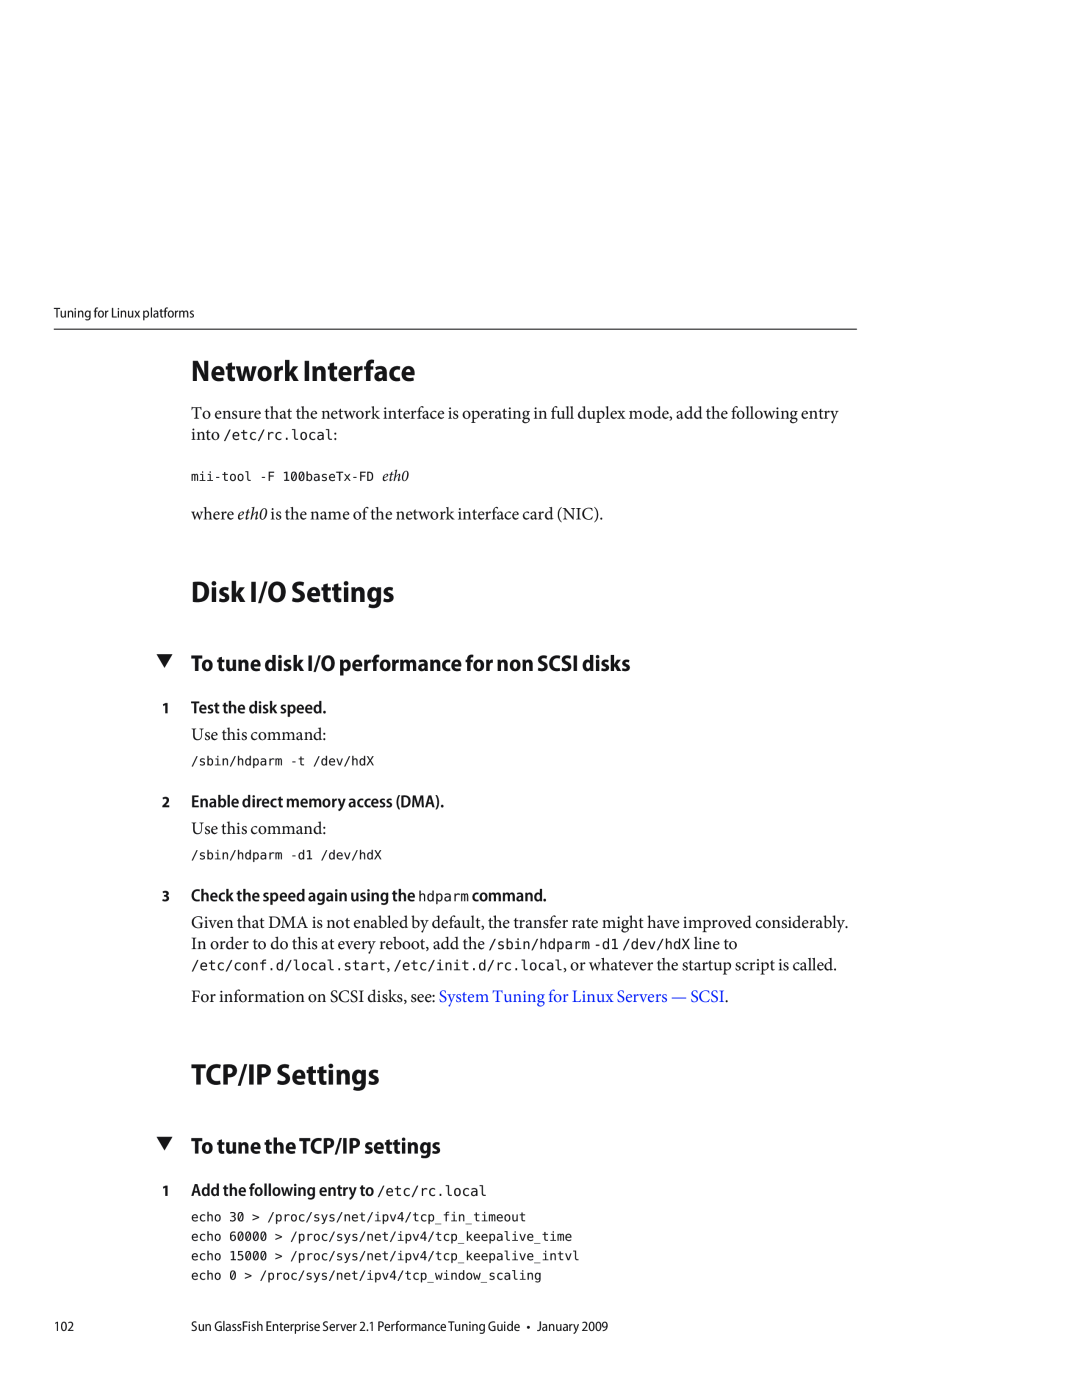 Sun Microsystems 820434310 manual Network Interface, Disk I/O Settings, TCP/IP Settings, To tune the TCP/IP settings 